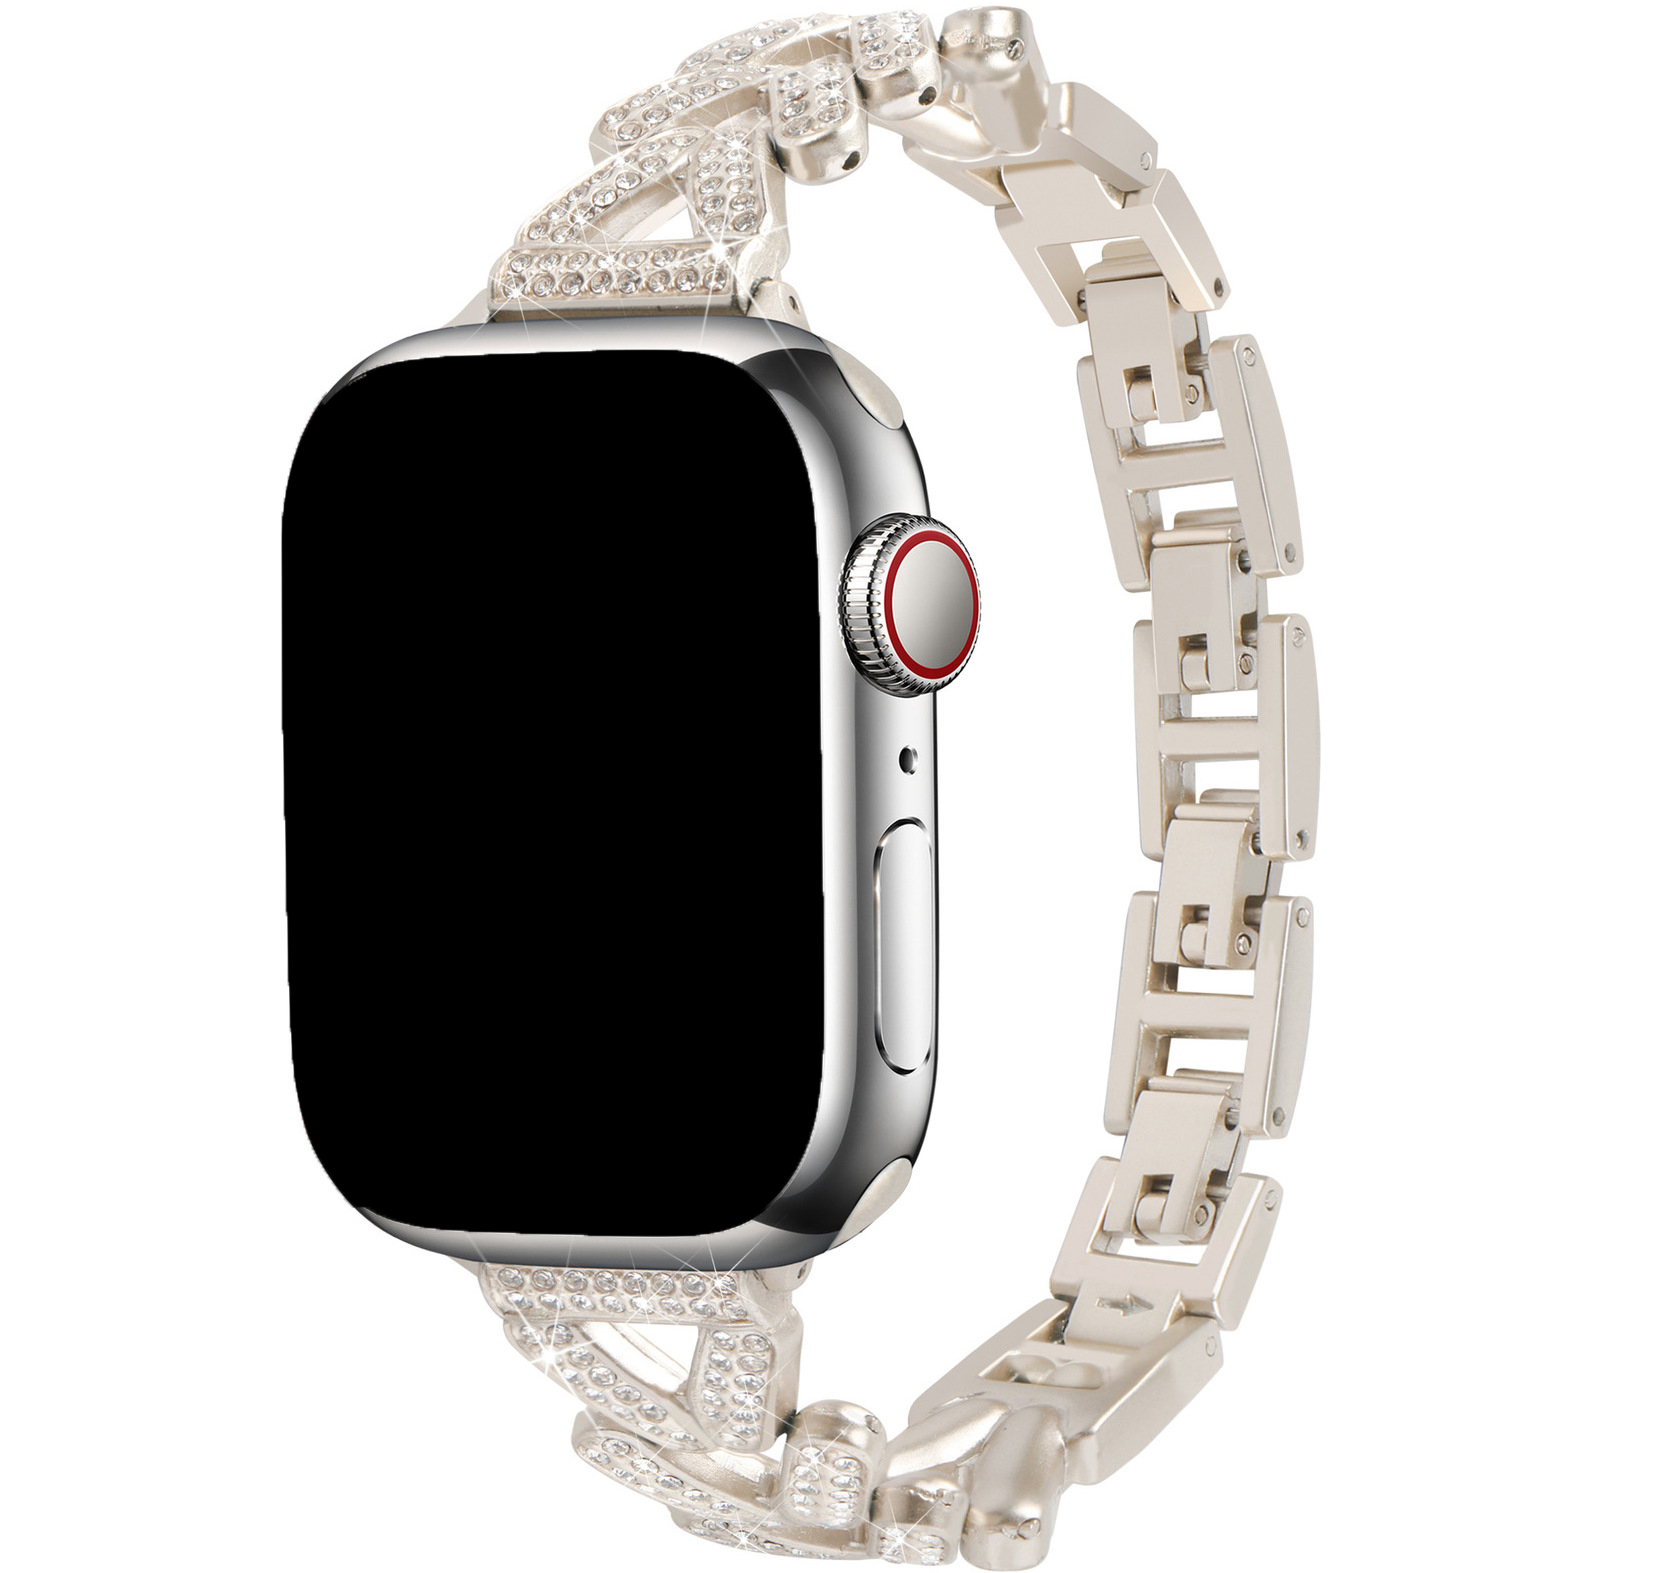 Cinturino a maglie in acciaio a forma di cuore per Apple Watch - Faye galassia